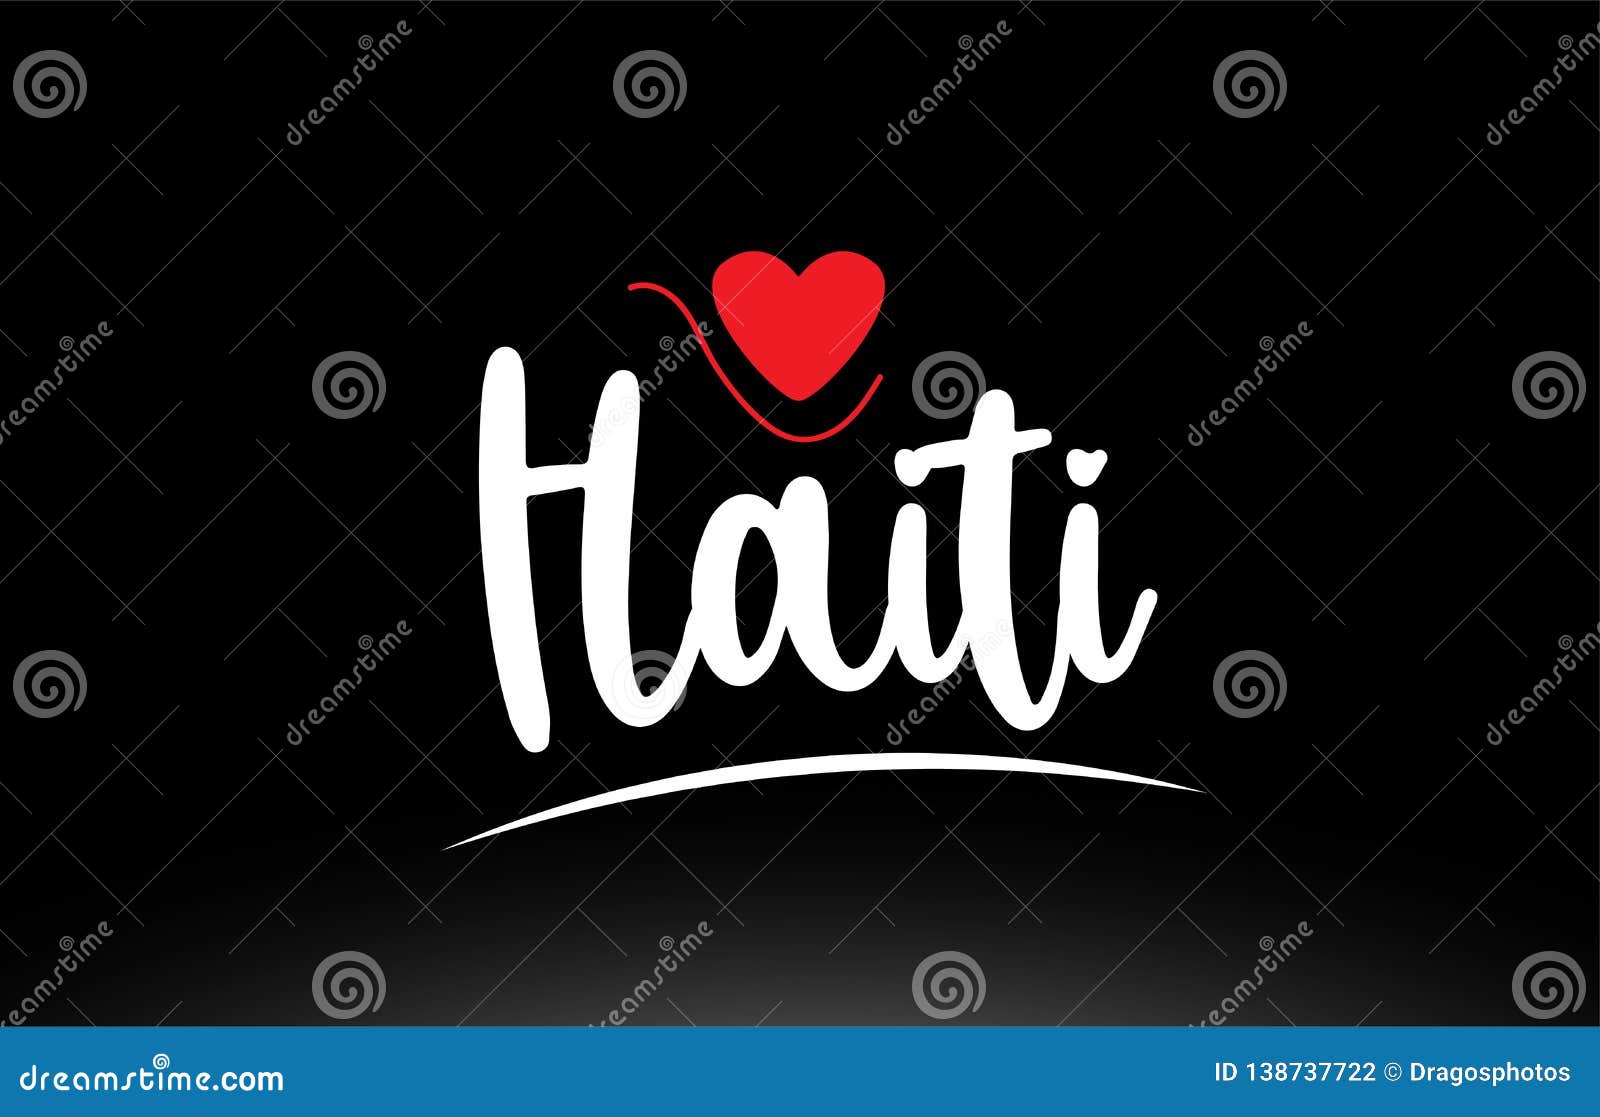 haiti country text typography logo icon  on black background